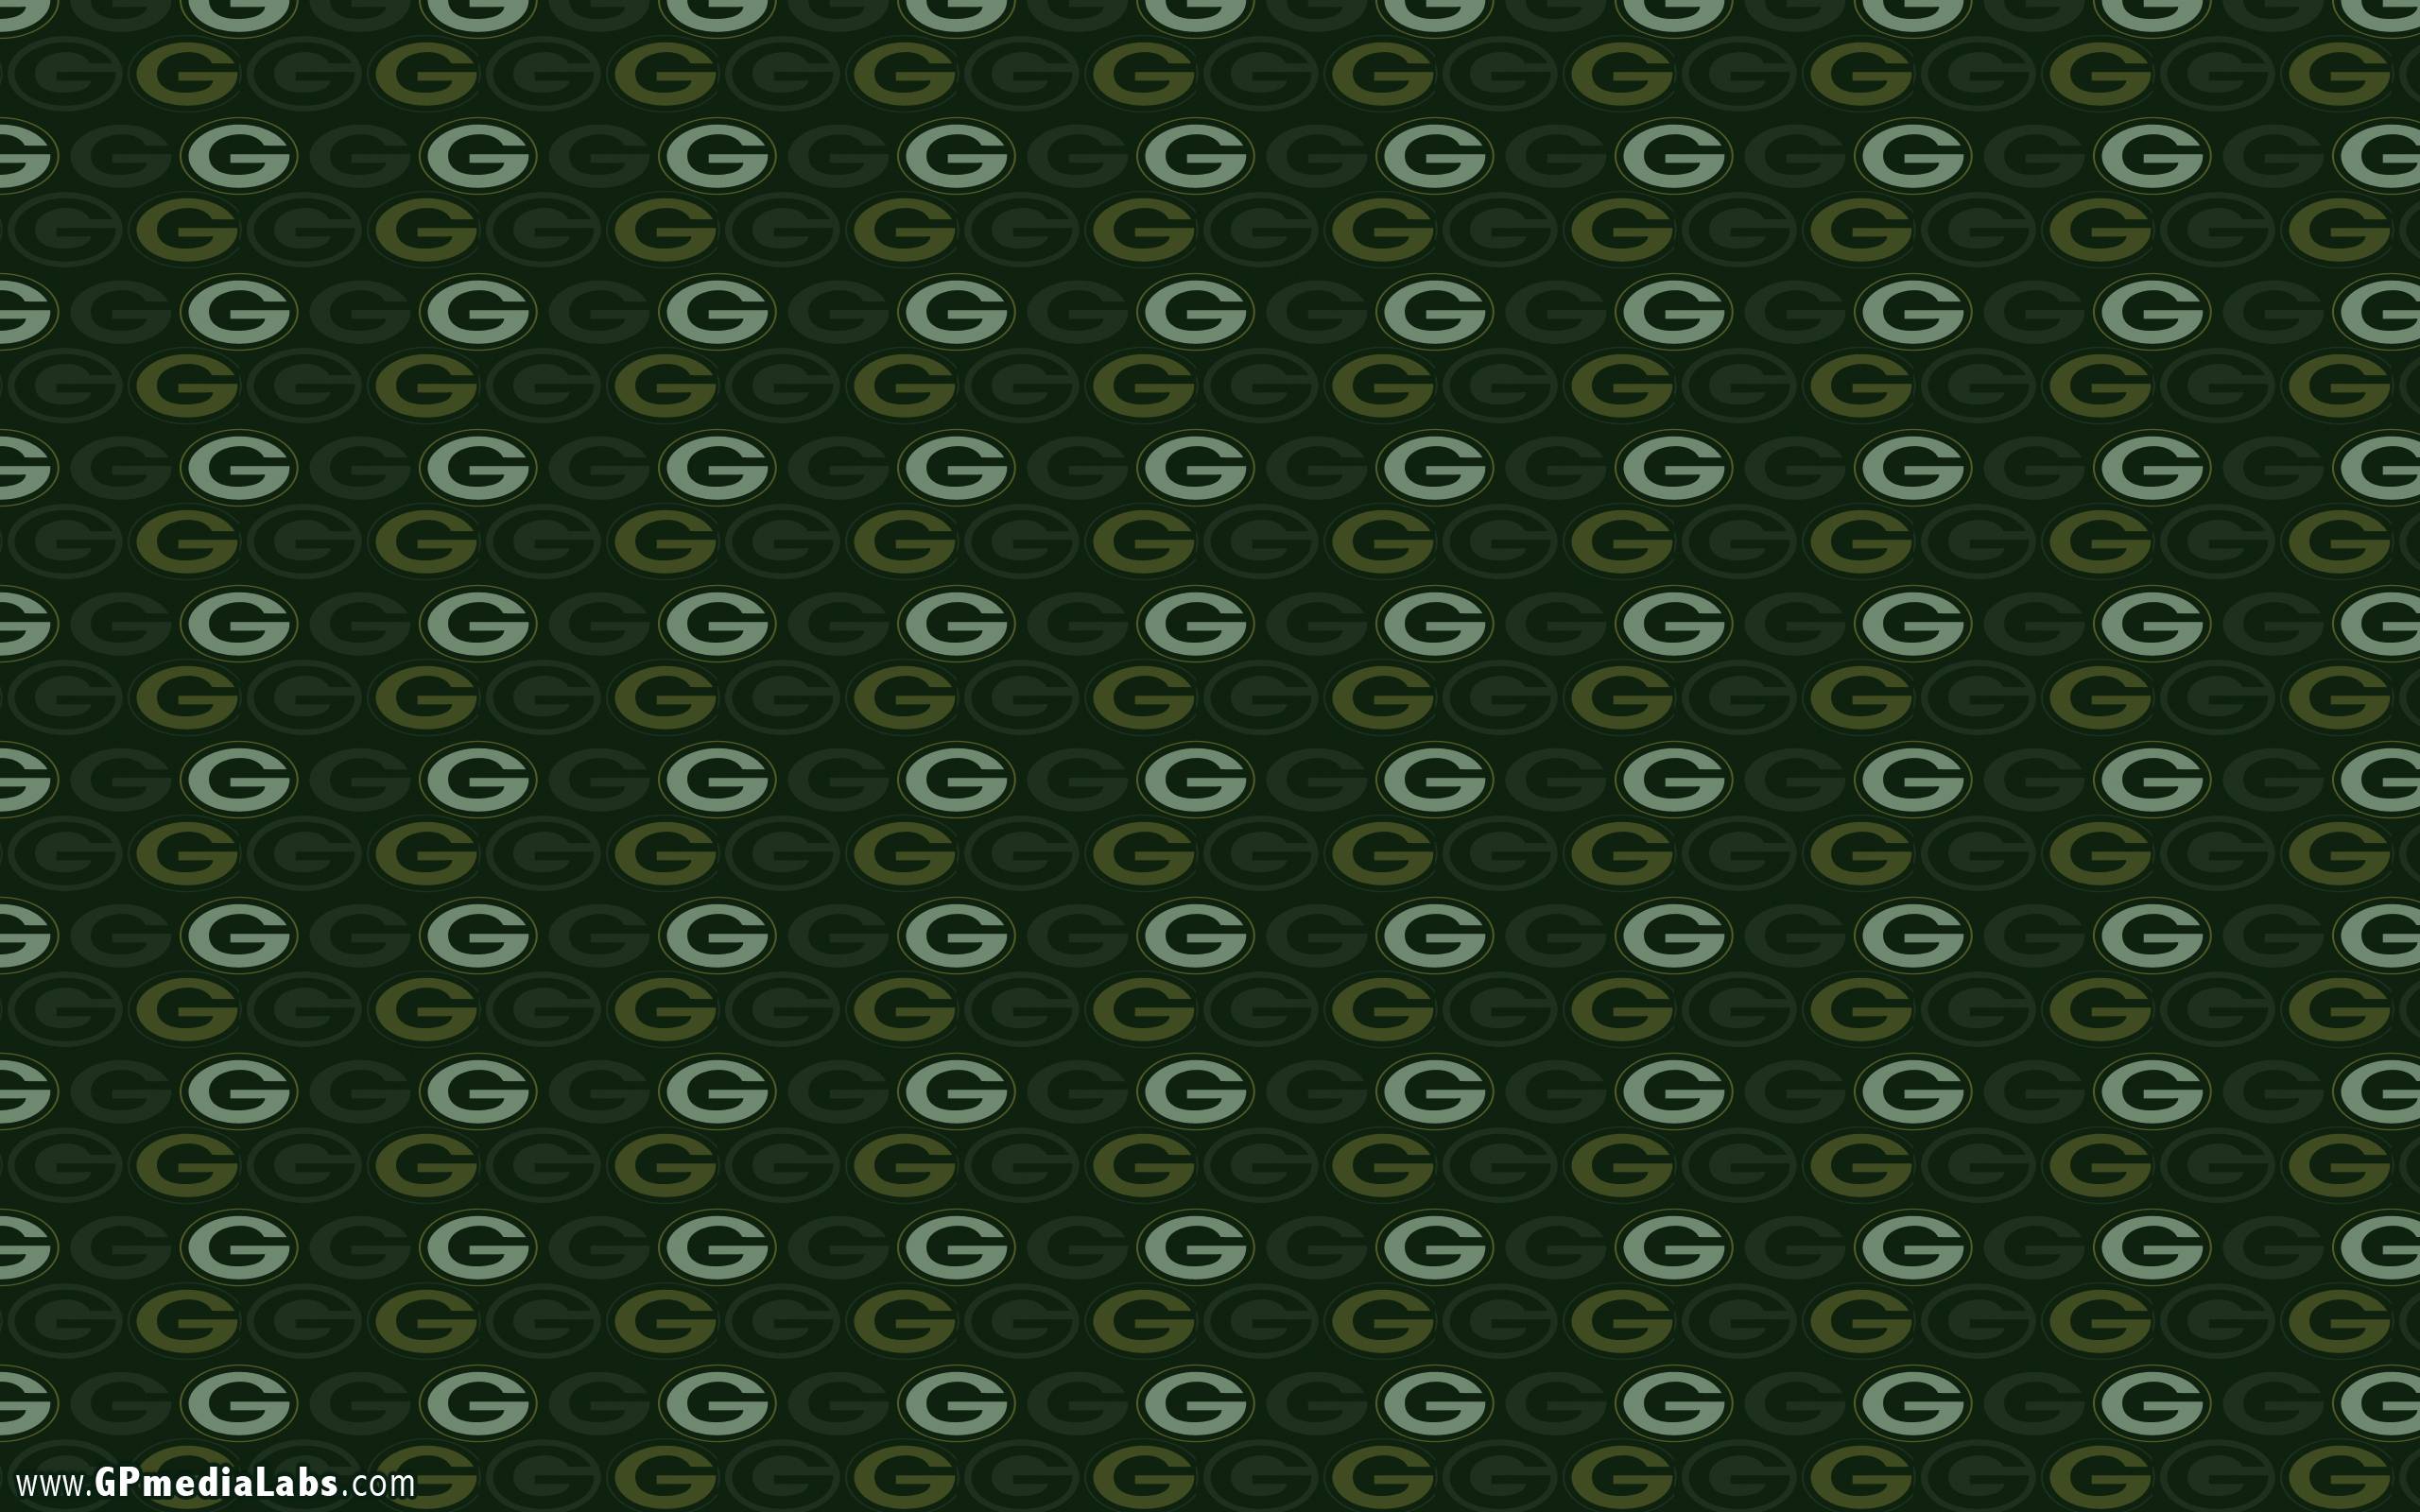 justpict.com Greenbay Packers Wallpaper